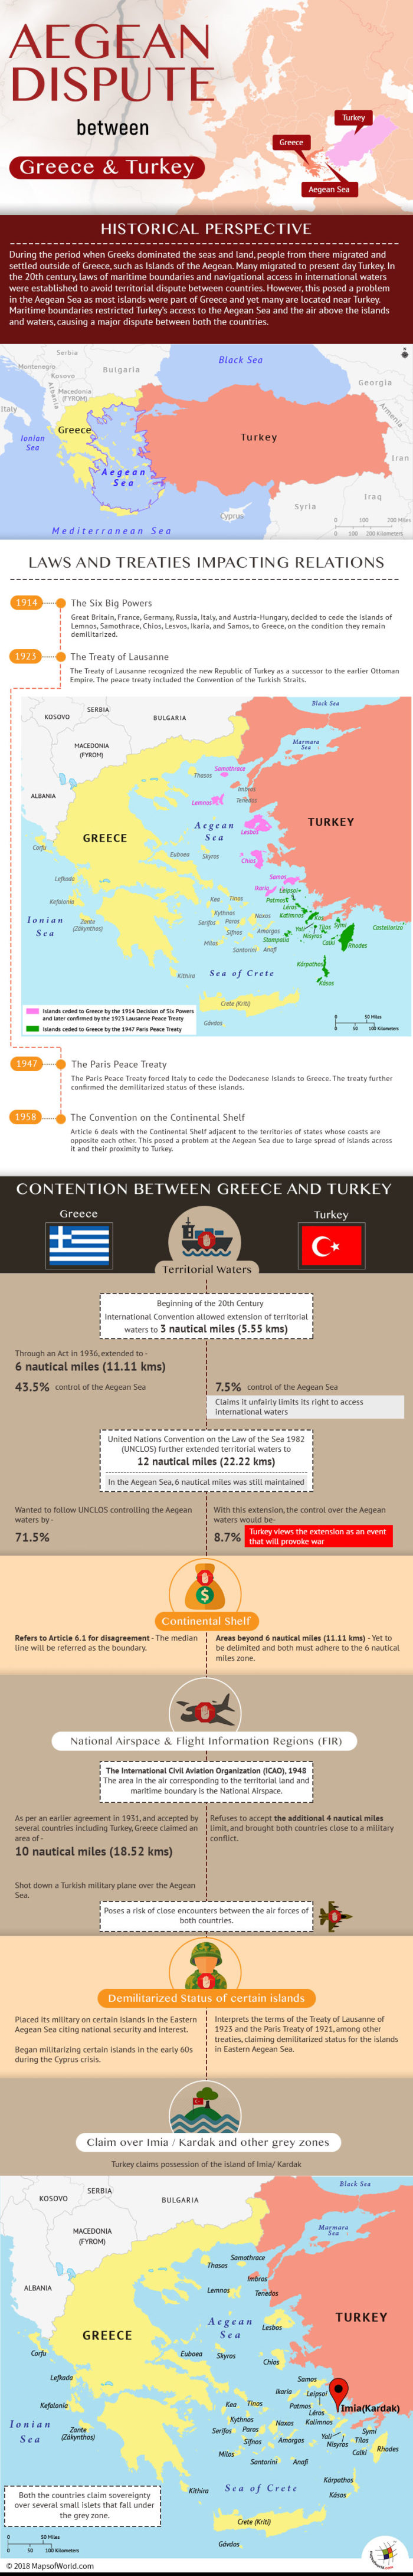 Infographic describing Aegean Dispute